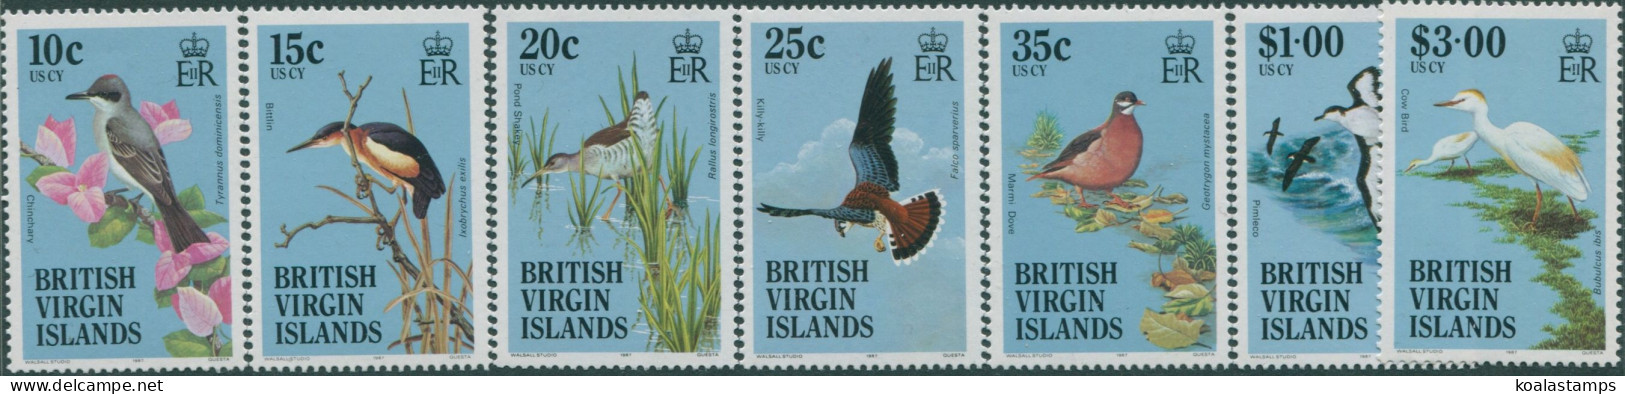 British Virgin Islands 1985 SG564-577 Birds MNH - British Virgin Islands